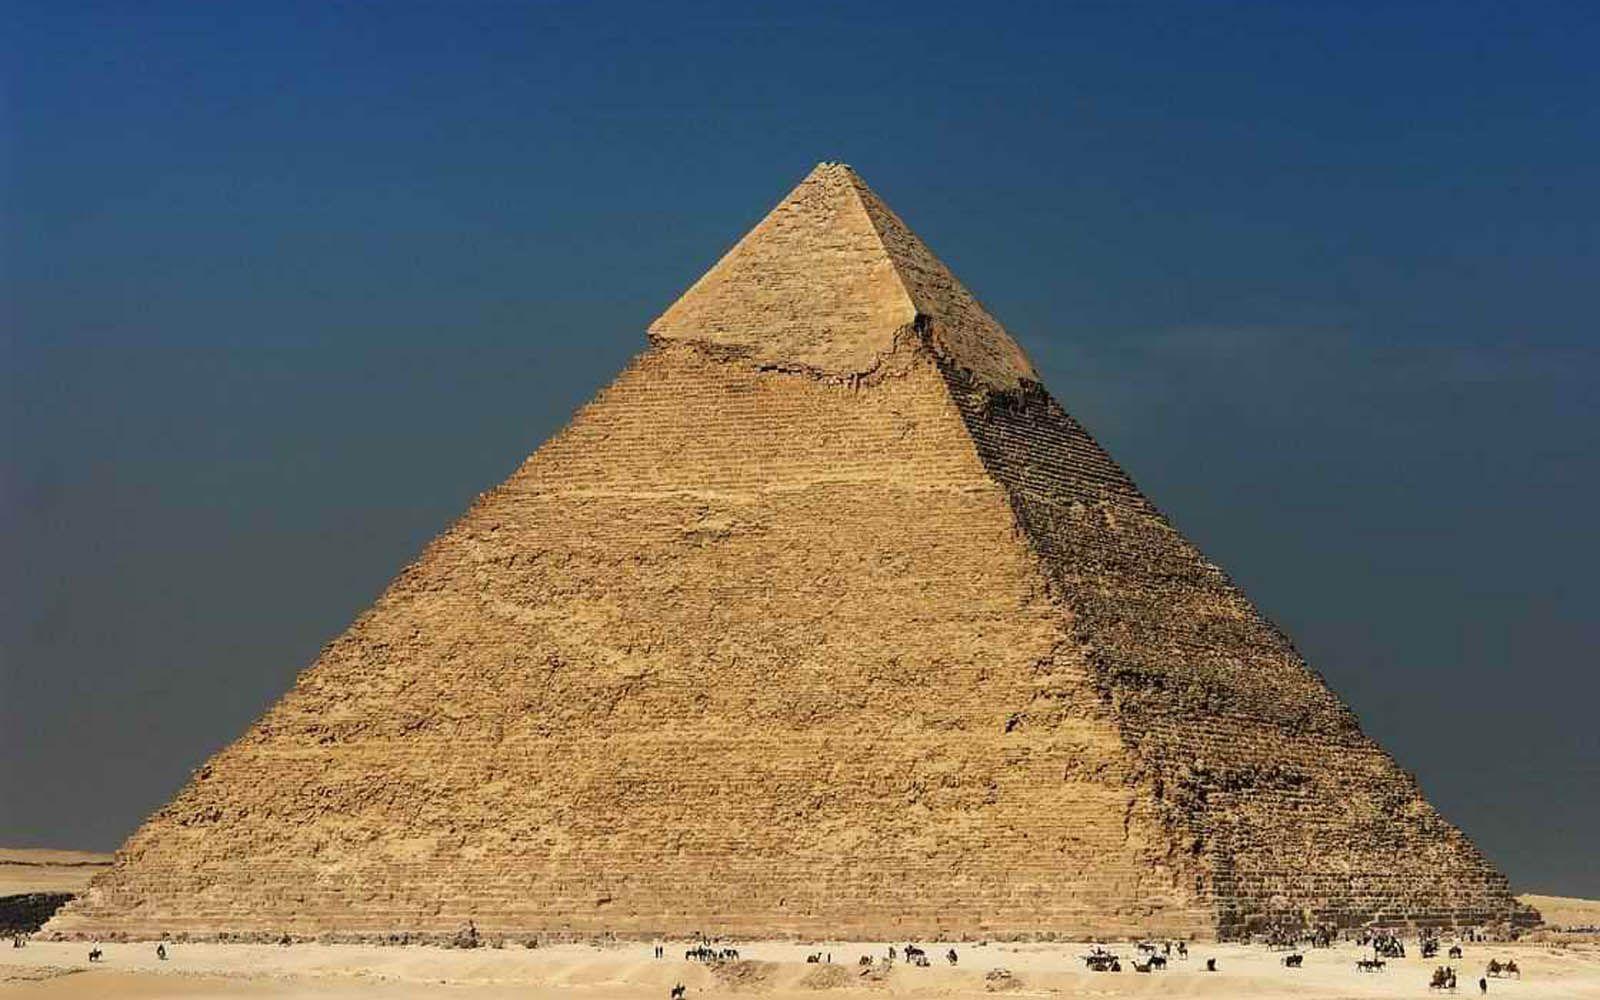 Adorable Pyramid Wallpaper, 403362037 1600x1000 px